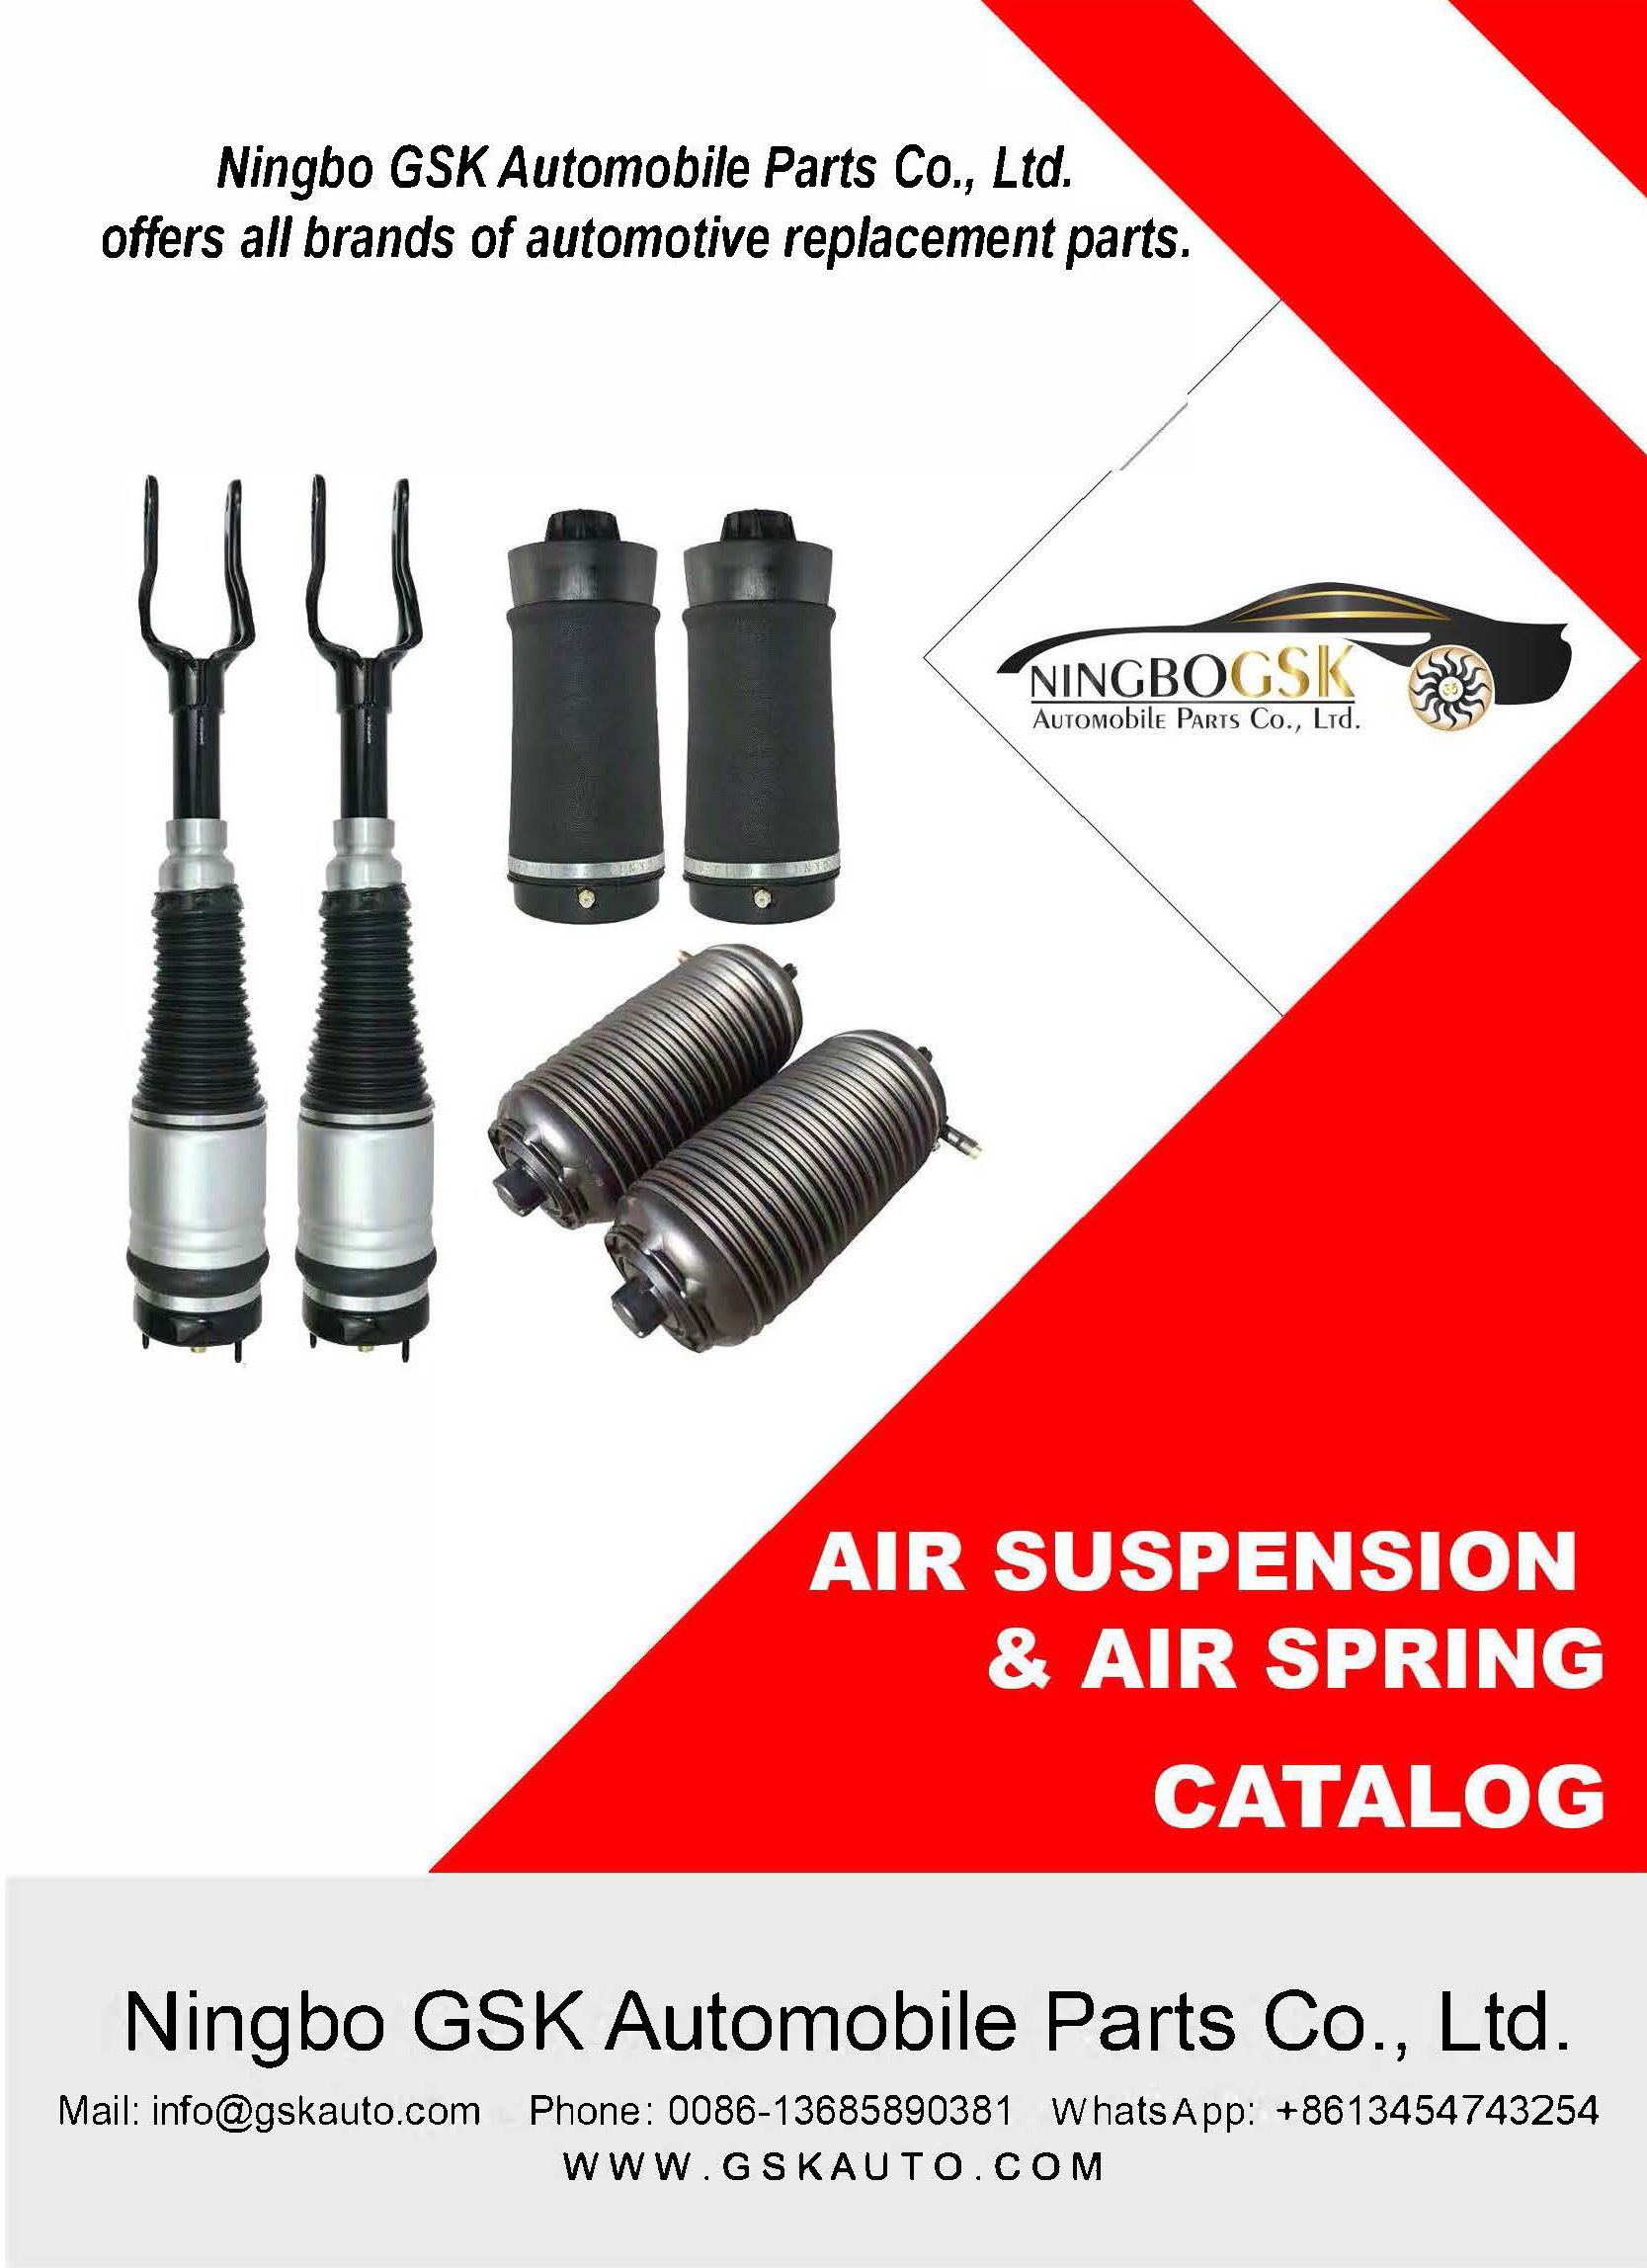 Air Suspensions and Air Springs Catalog